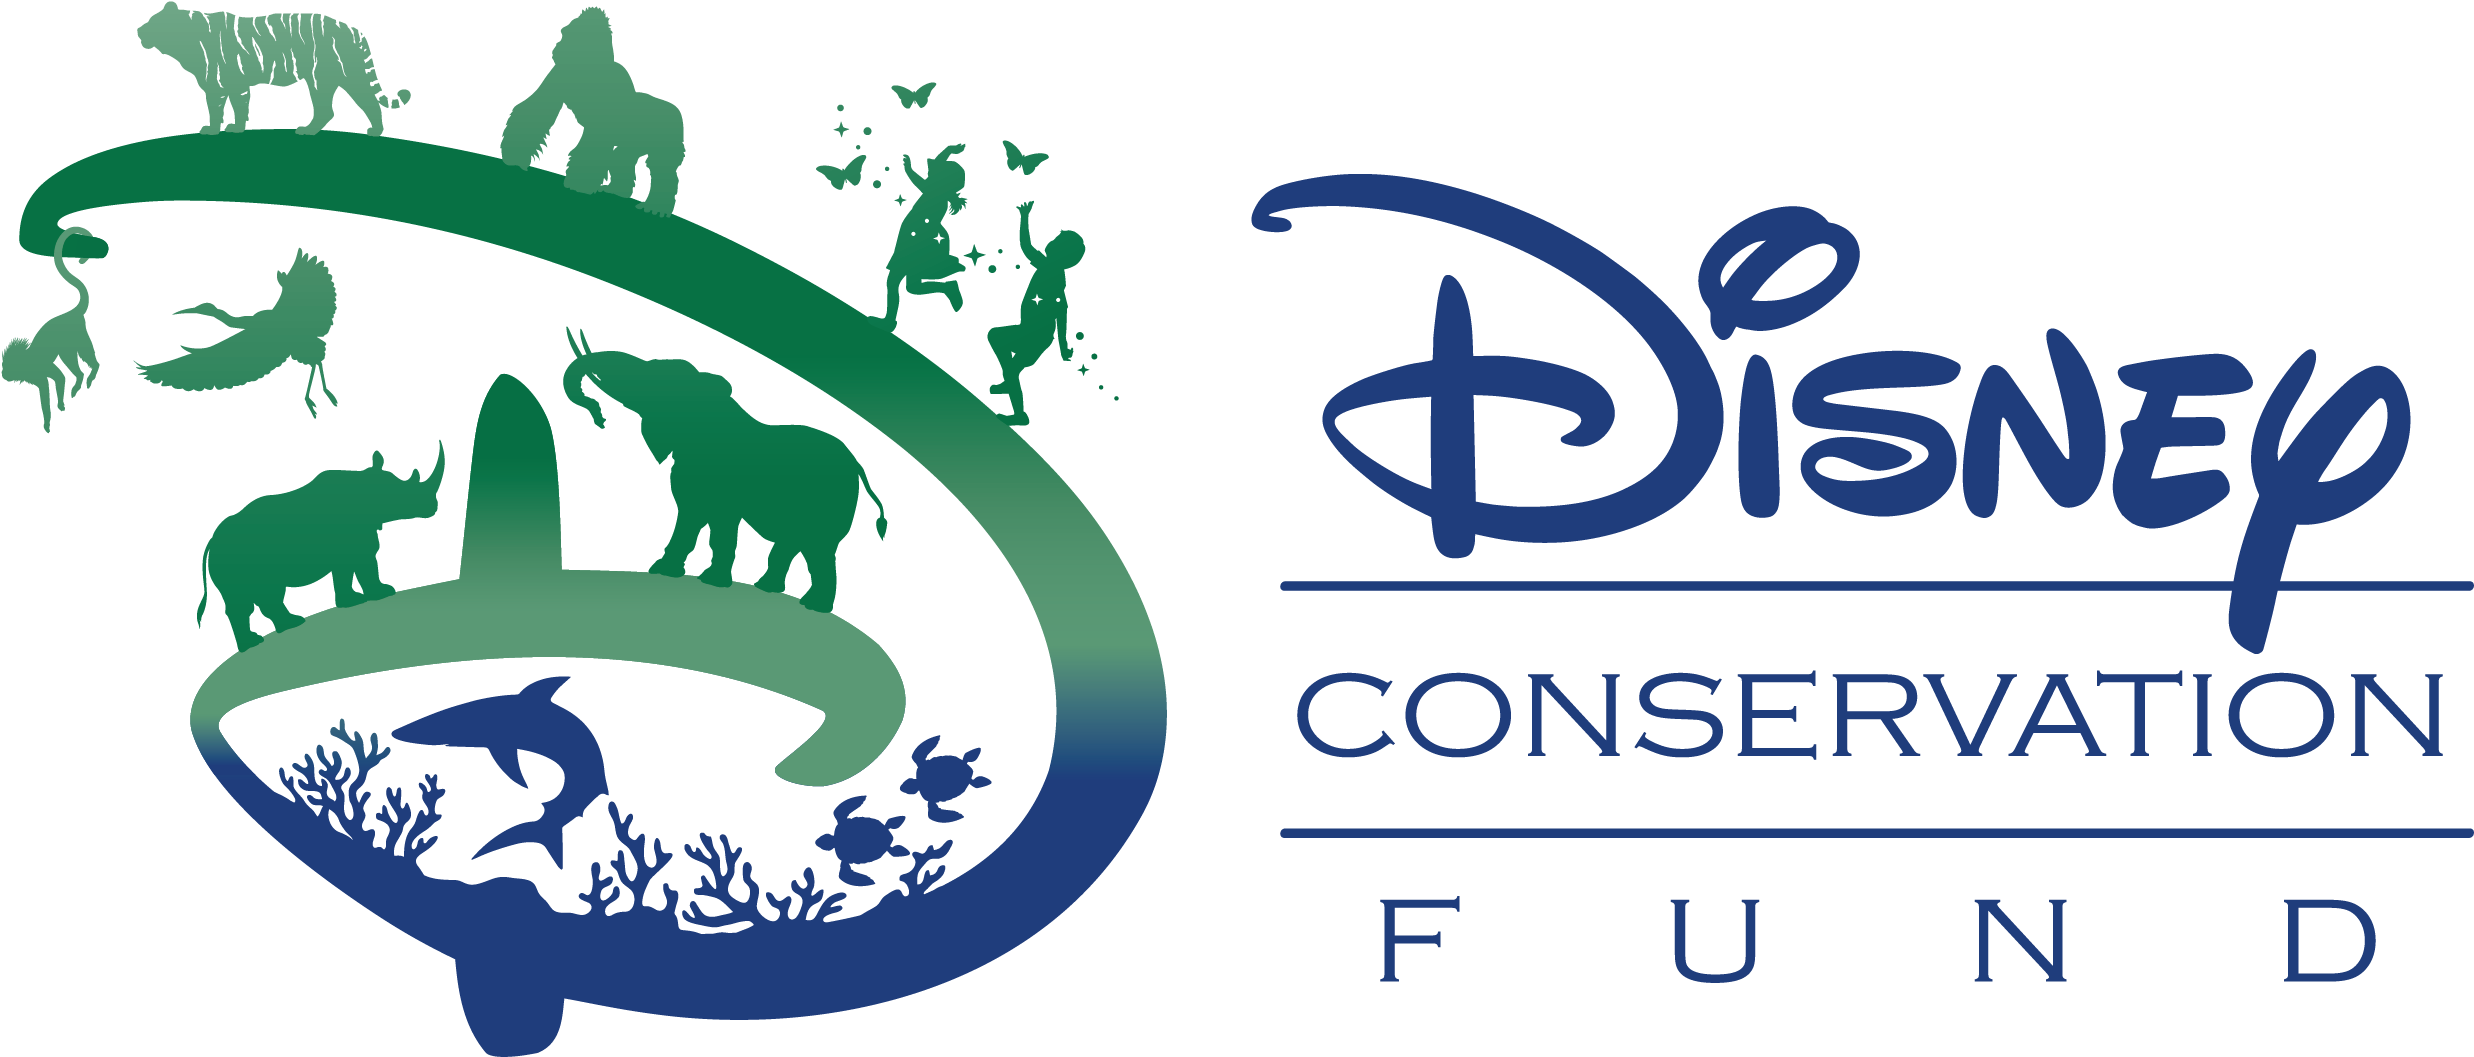 Disney Conservation Fund Provides Emergency Support - Disney Conservation Fund (3300x1950), Png Download